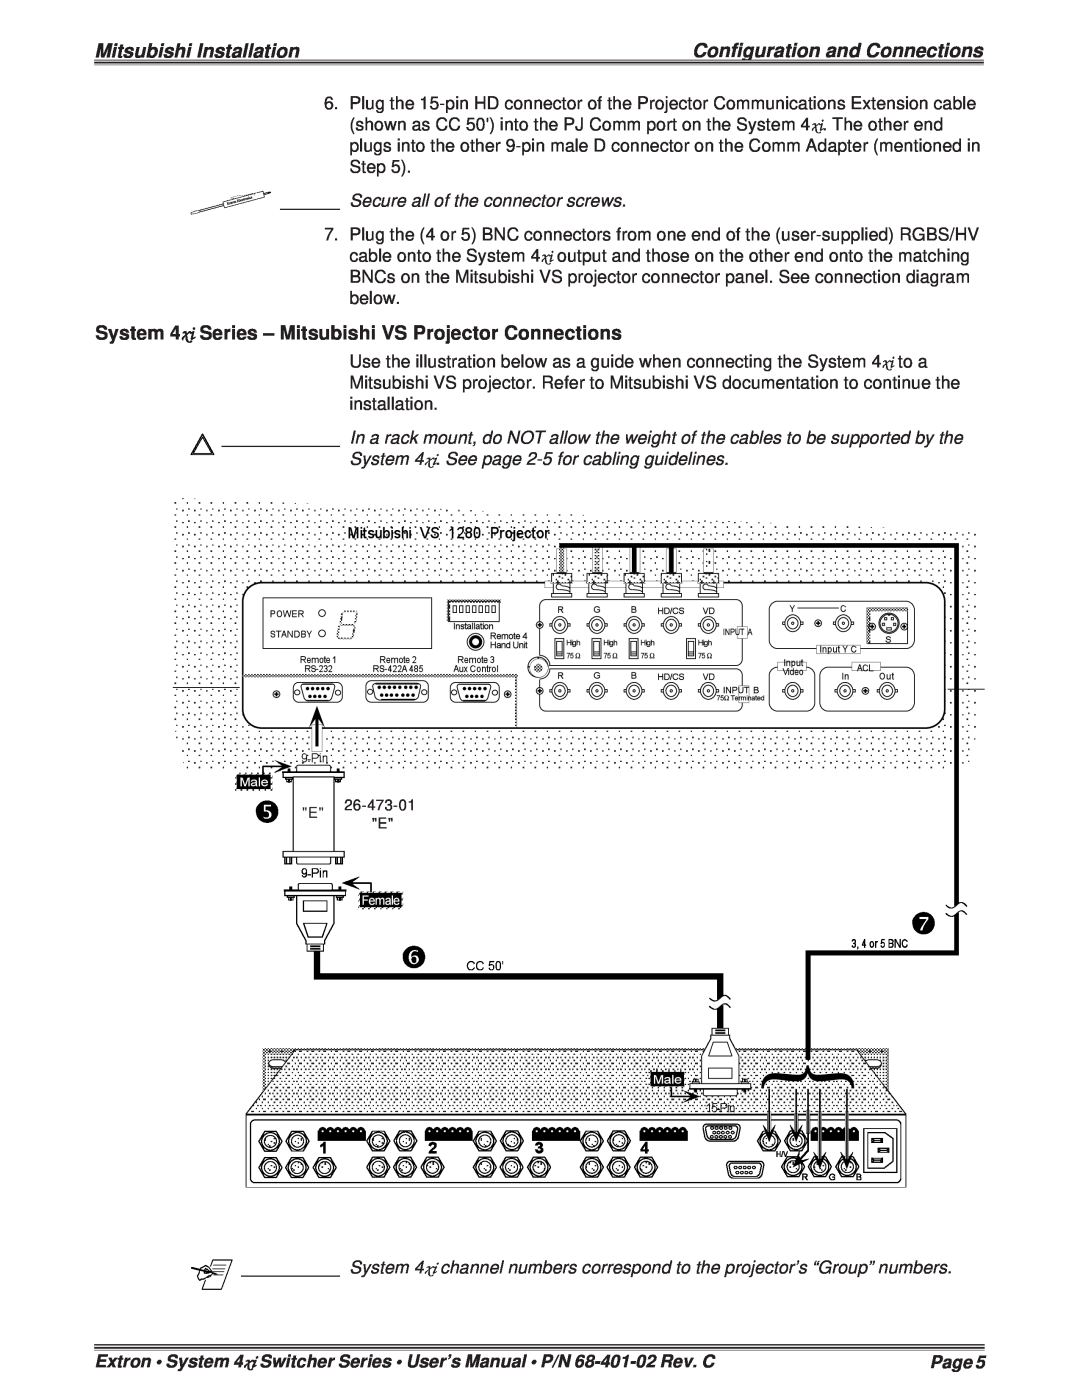 Mitsubishi Electronics 4XIXIXIXIXI user manual Mitsubishi Installation, Configuration and Connections, Page 